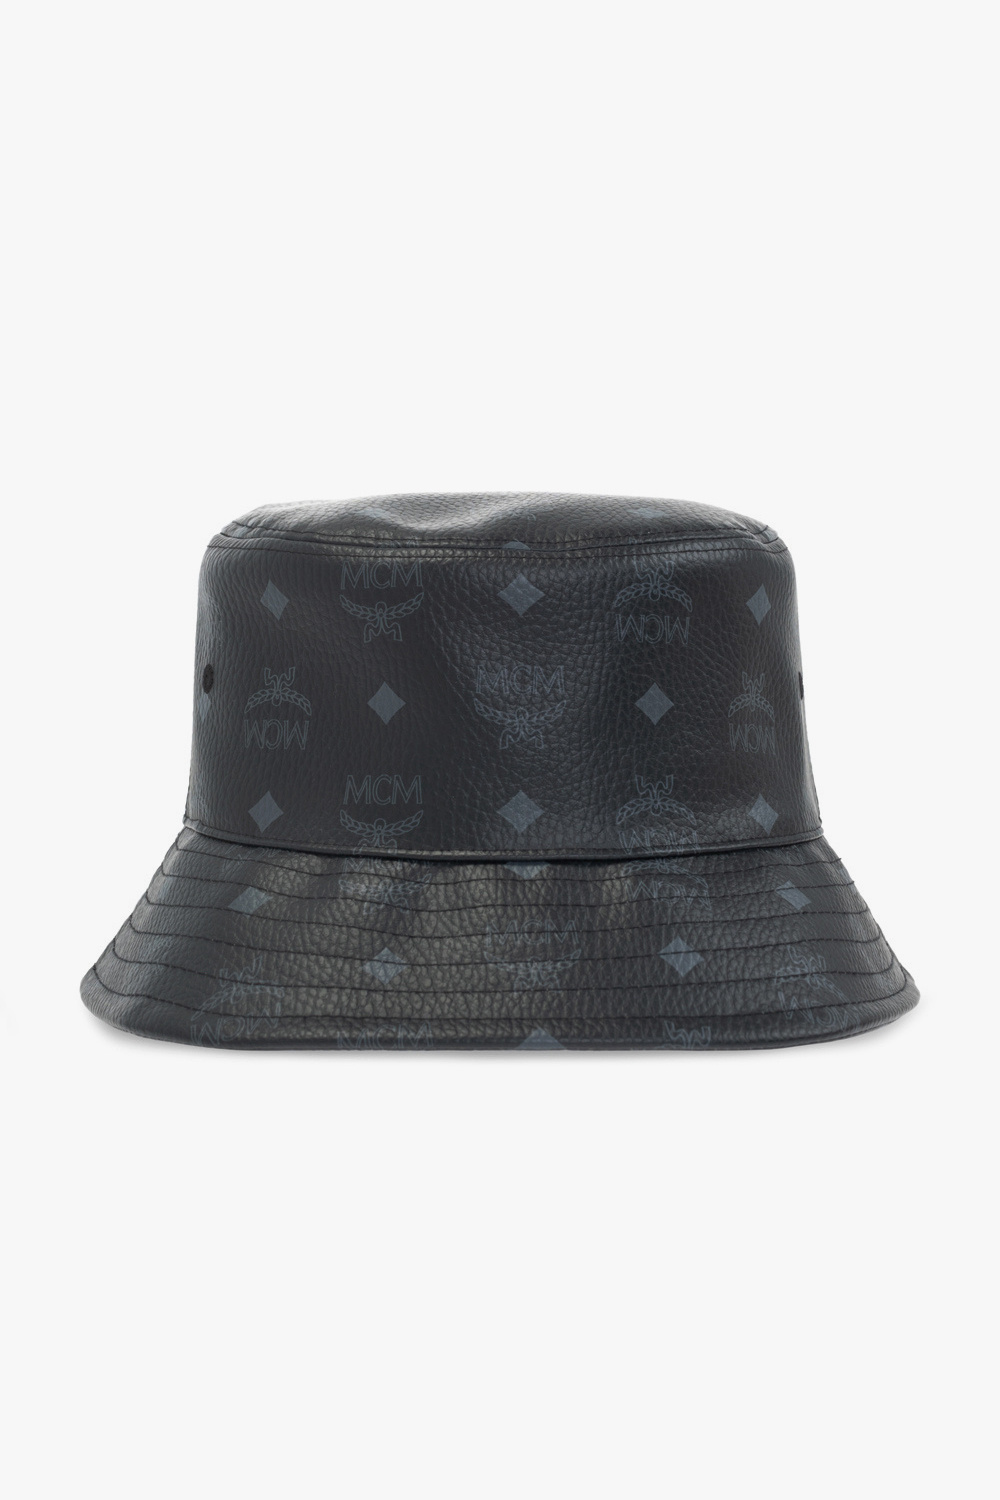 IetpShops Wip Carhartt - - - Cap Harlem Morocco hat embroidered sailor logo MCM